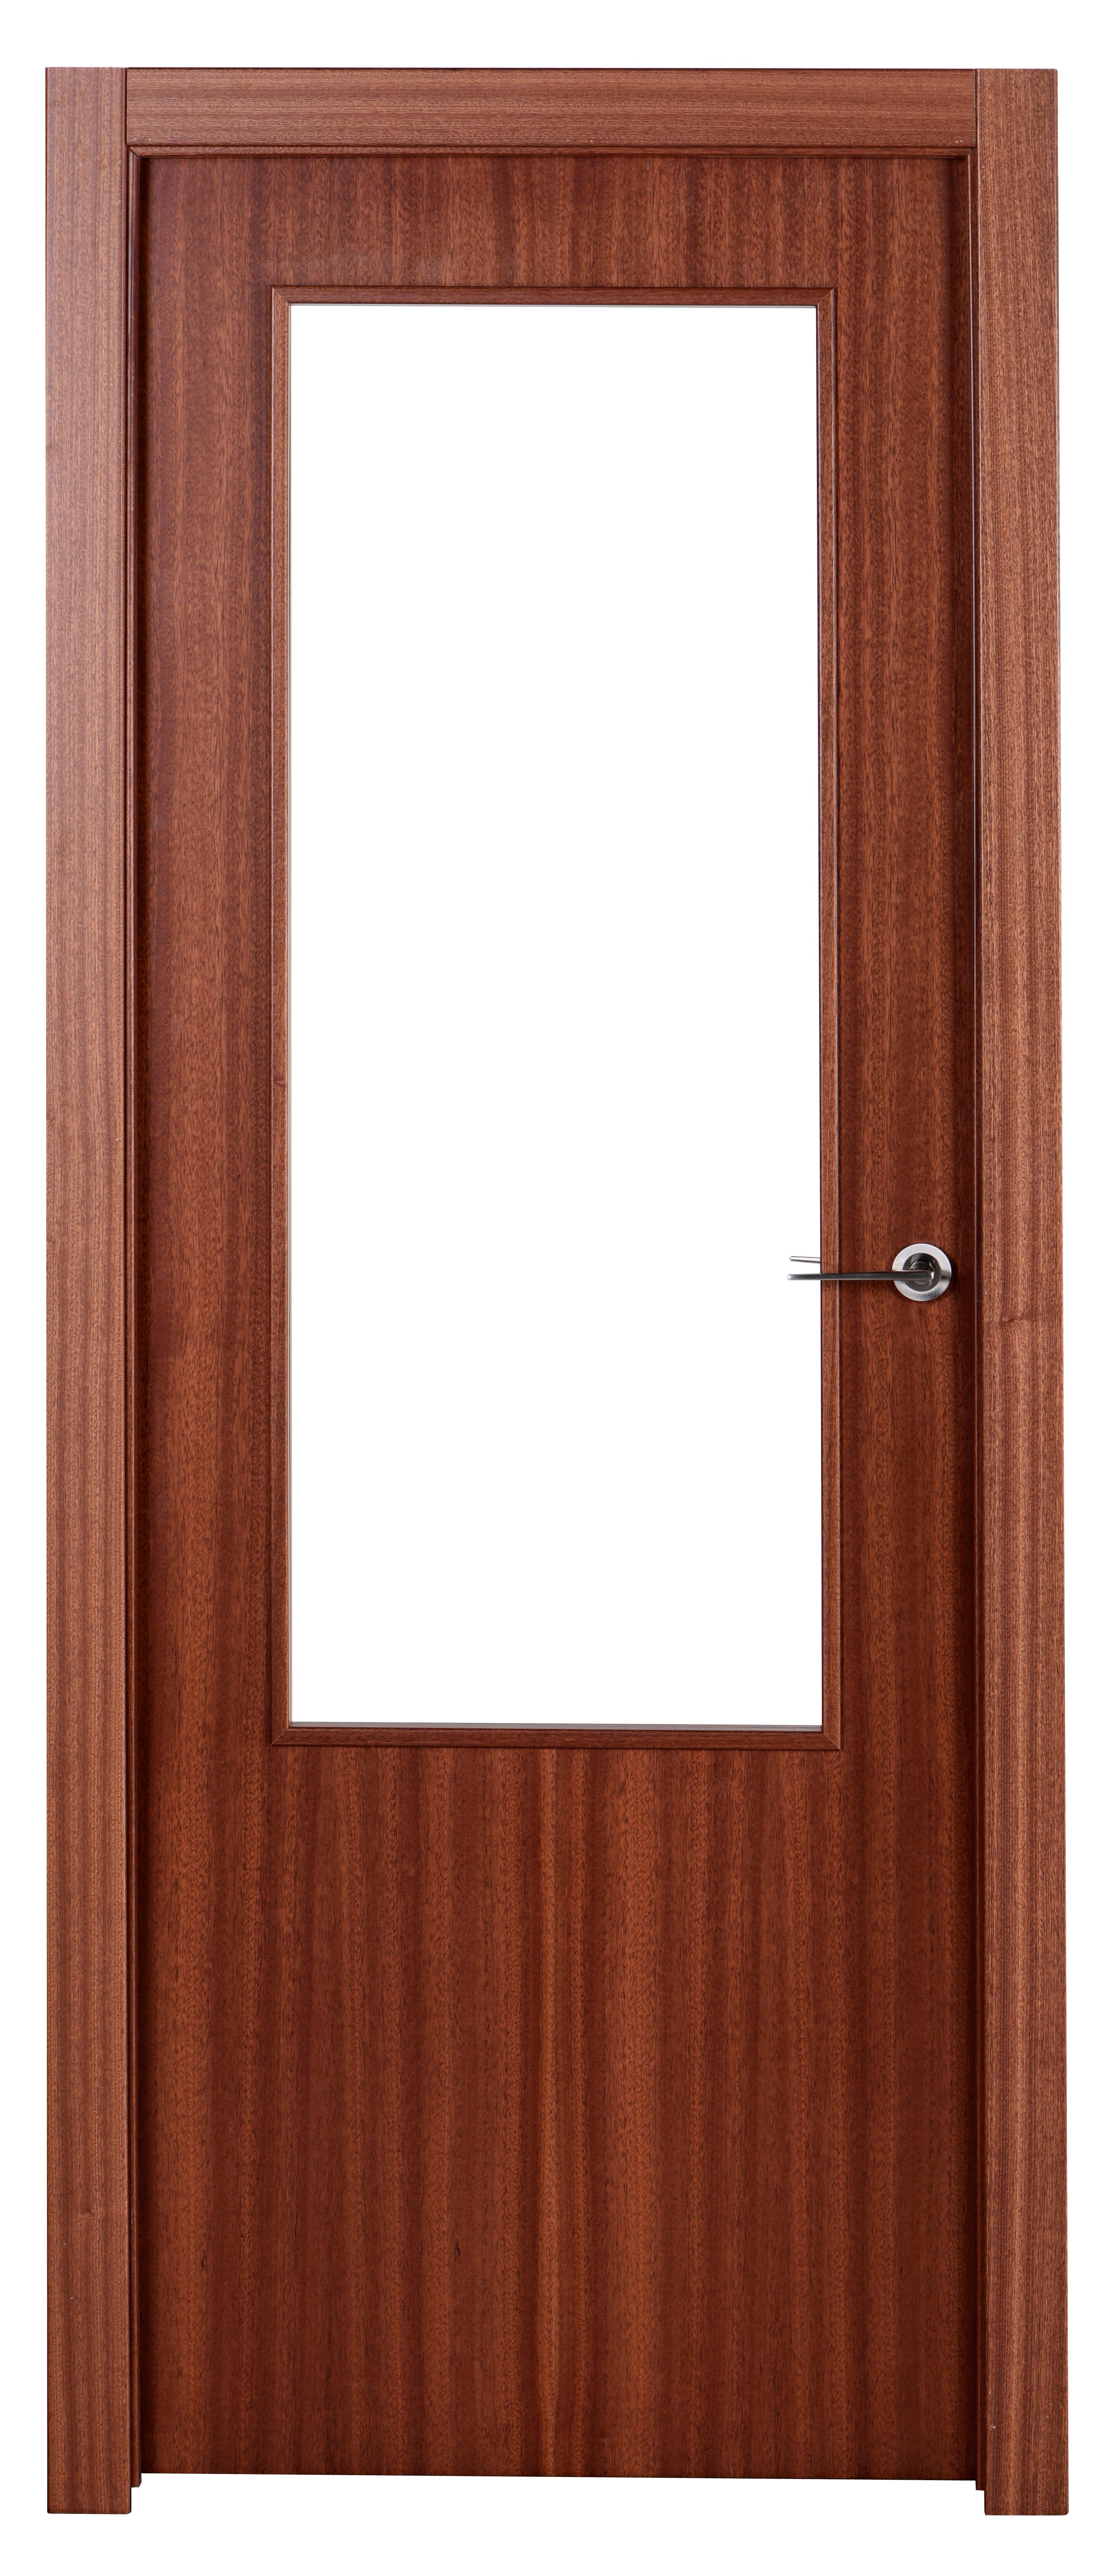 Puerta lisboa plus sapelly apertura izquierda con cristal 9x72.5cm